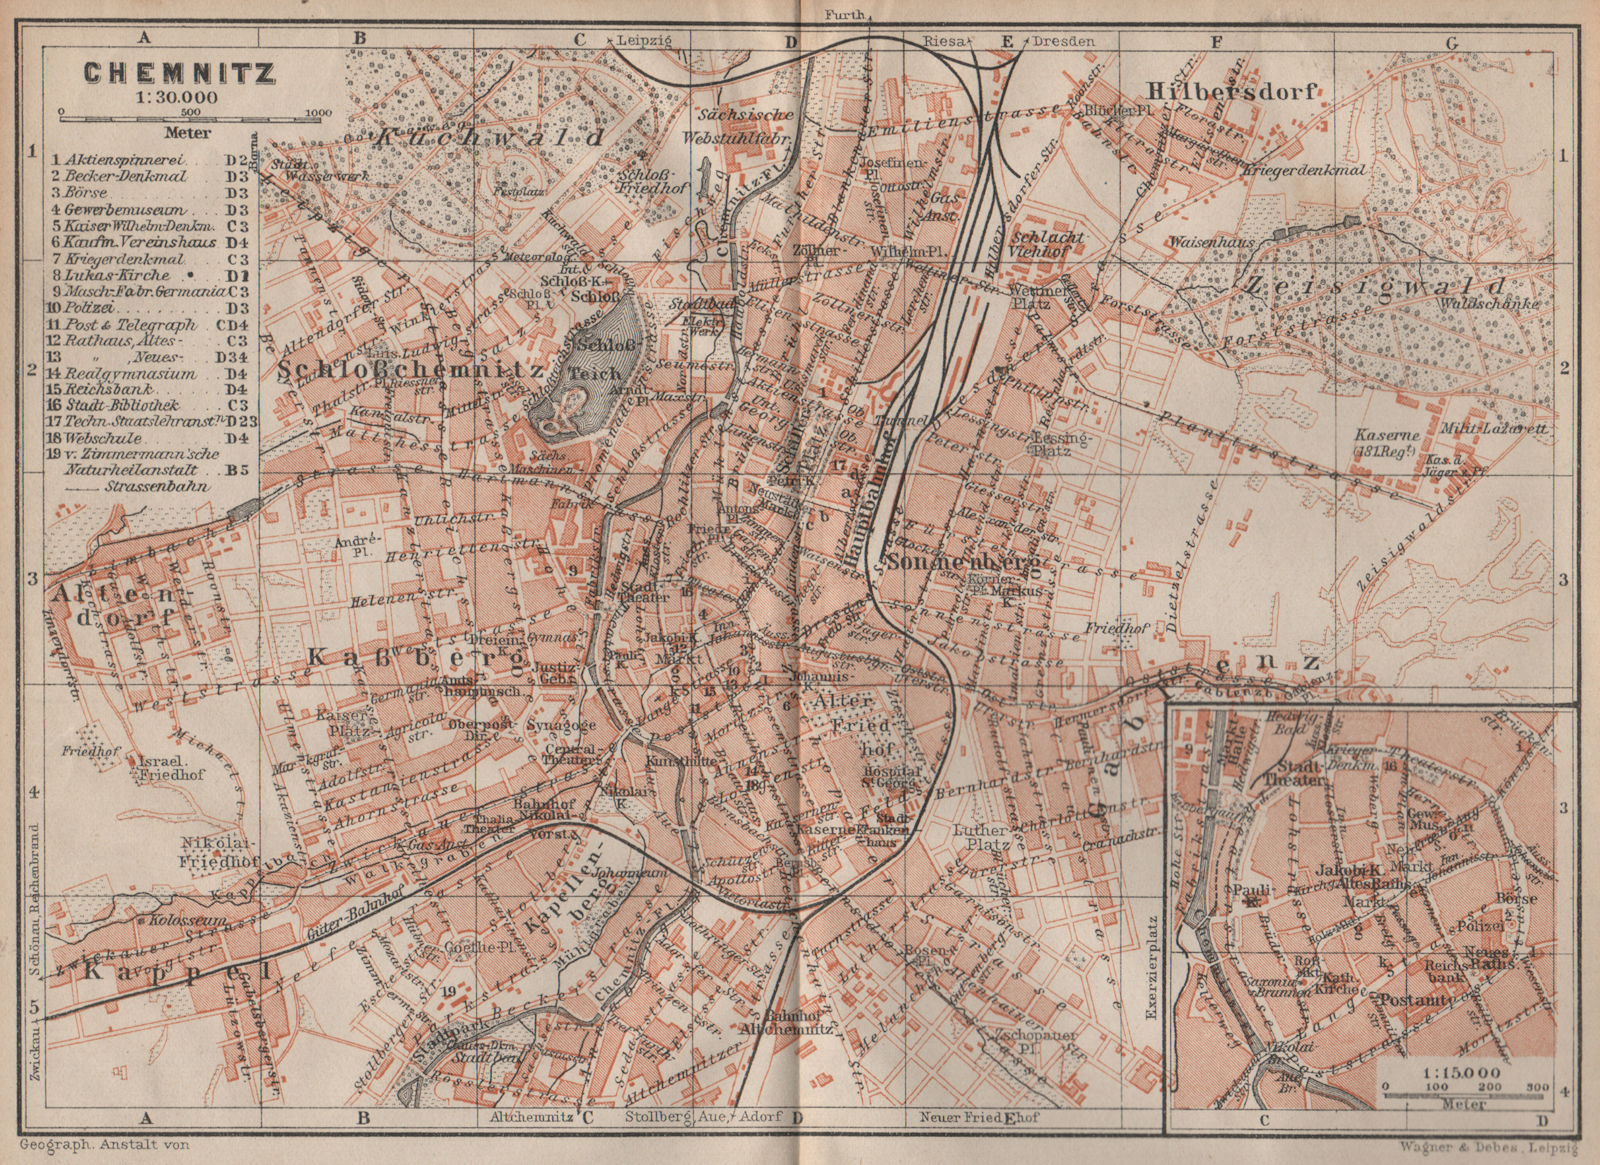 Associate Product CHEMNITZ antique town city stadtplan. Saxony karte. BAEDEKER 1904 old map